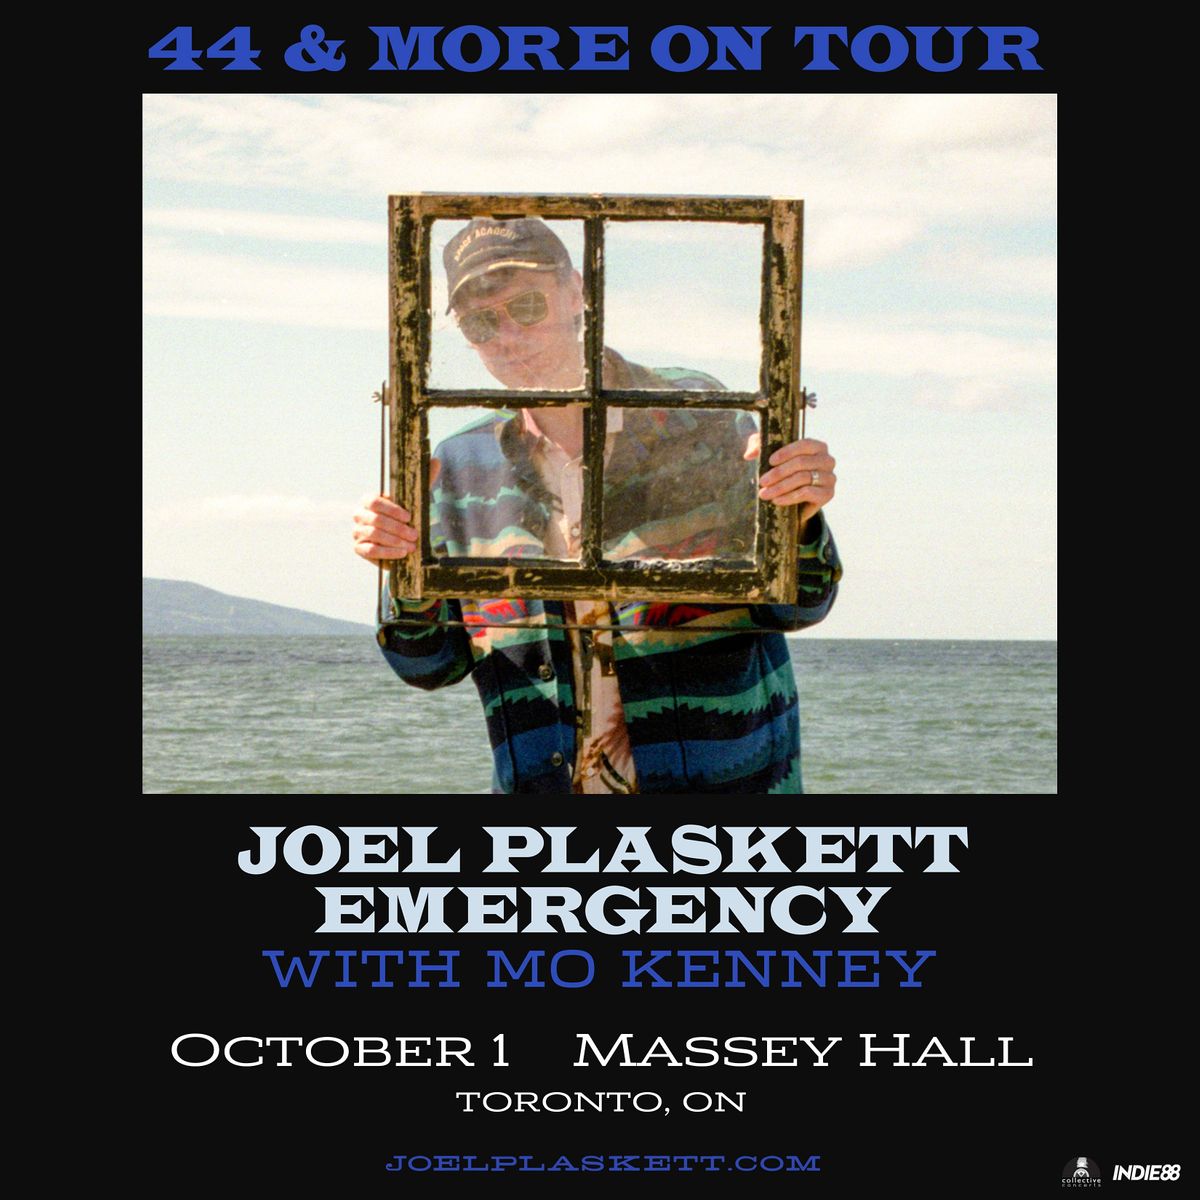 Joel Plaskett Emergency with Mo Kenney